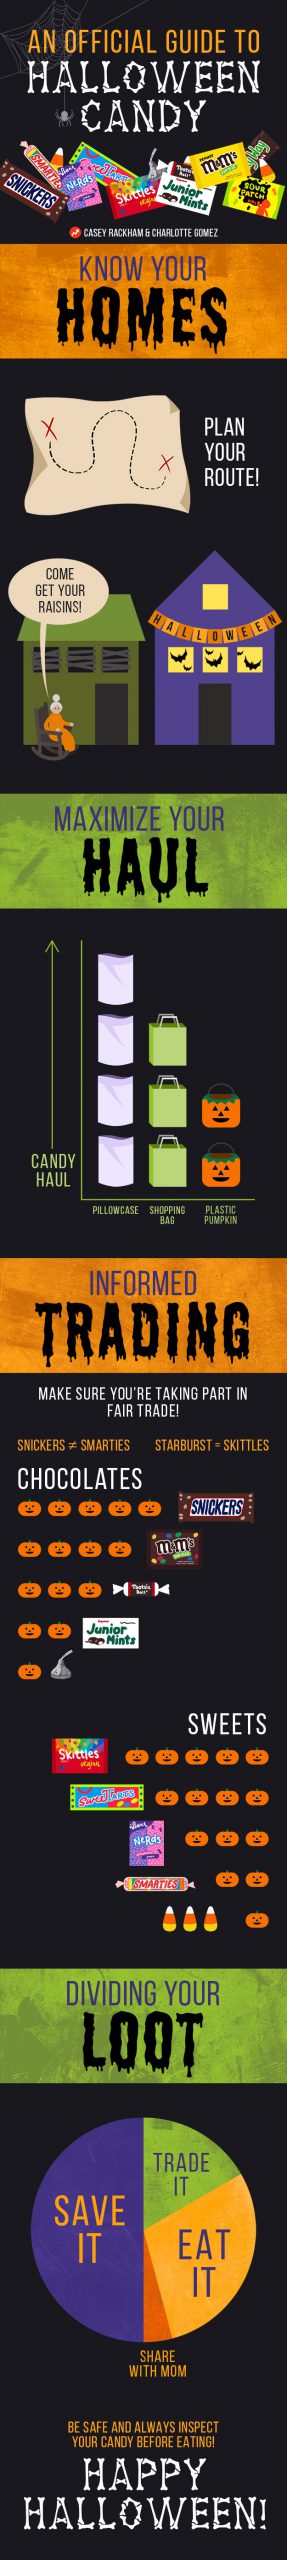 Halloween 2015 Infographic